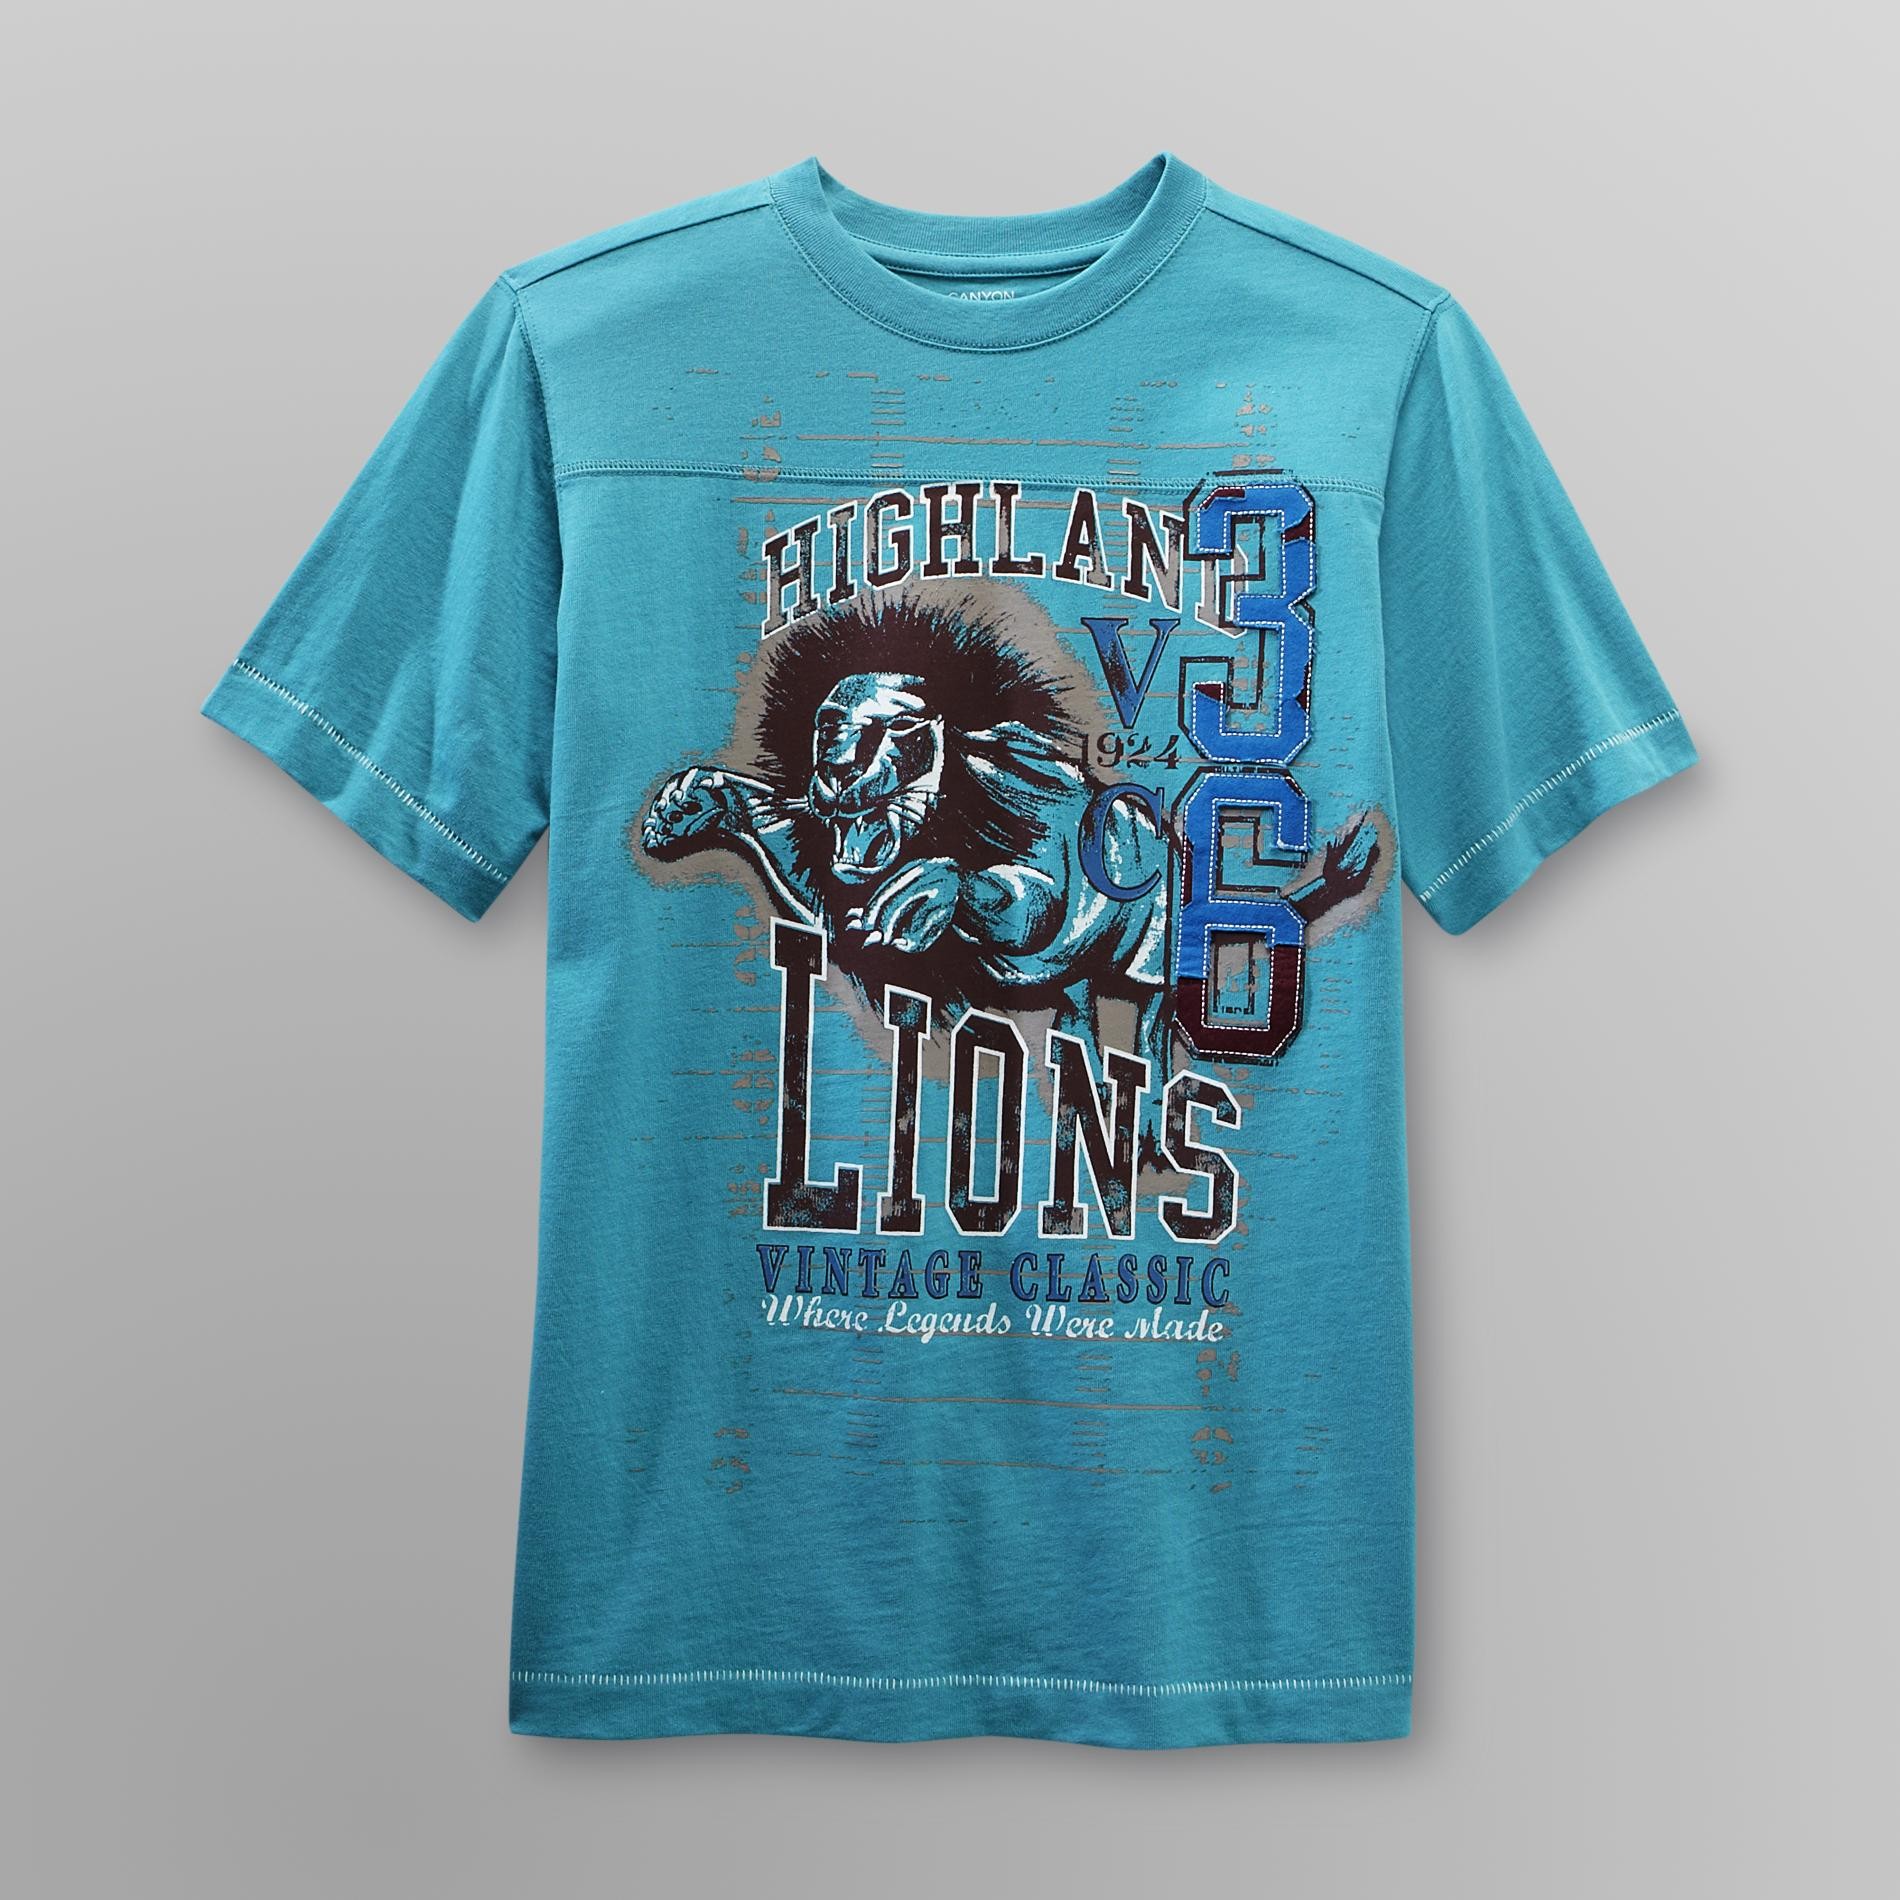 Canyon River Blues Boy's Graphic T-Shirt - Highland Lions